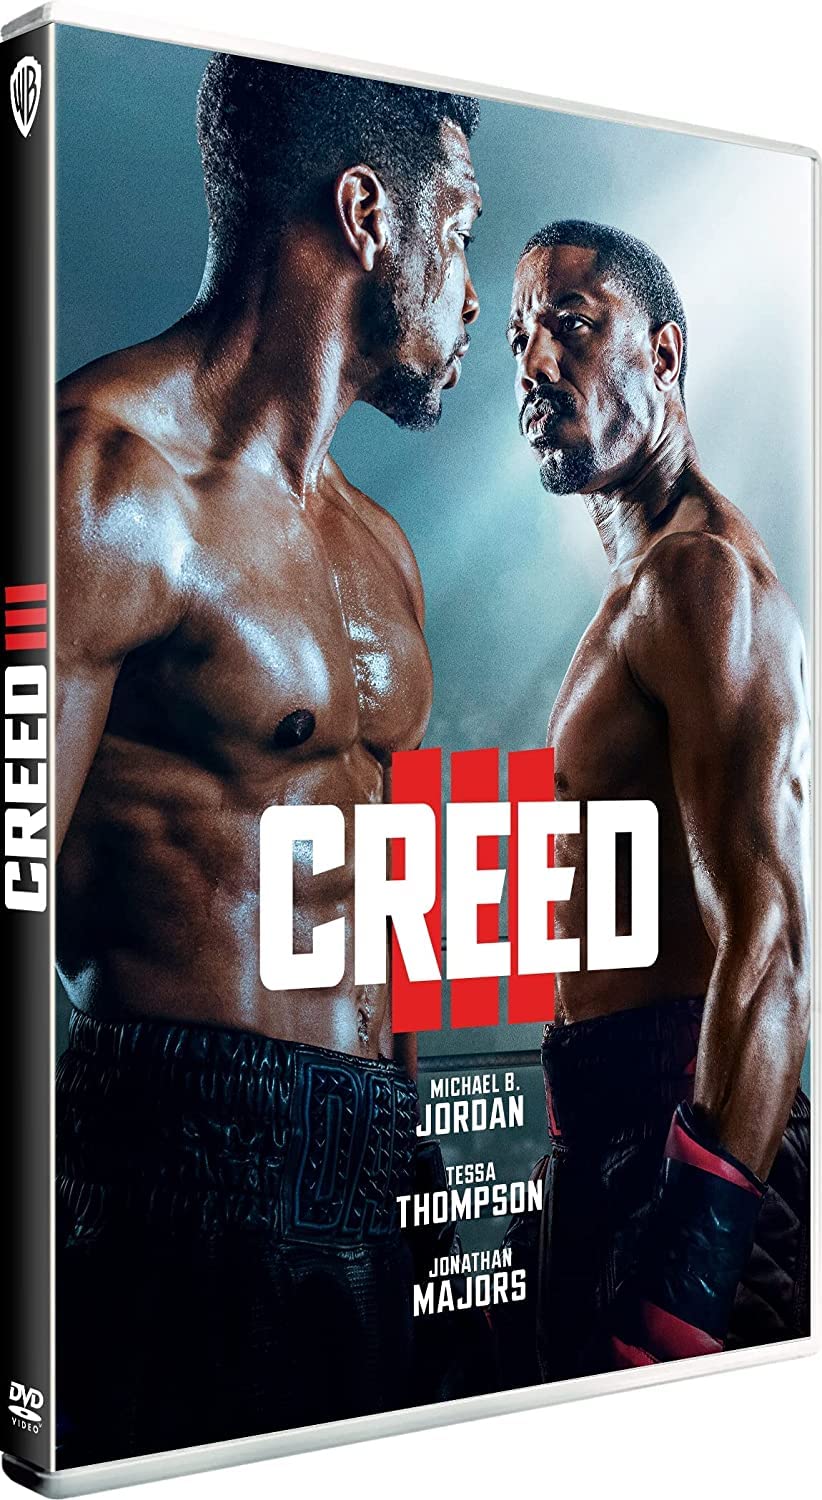 acheter Creed III - Edition Amazon [DVD] zHtoFqUHW Vente chaude